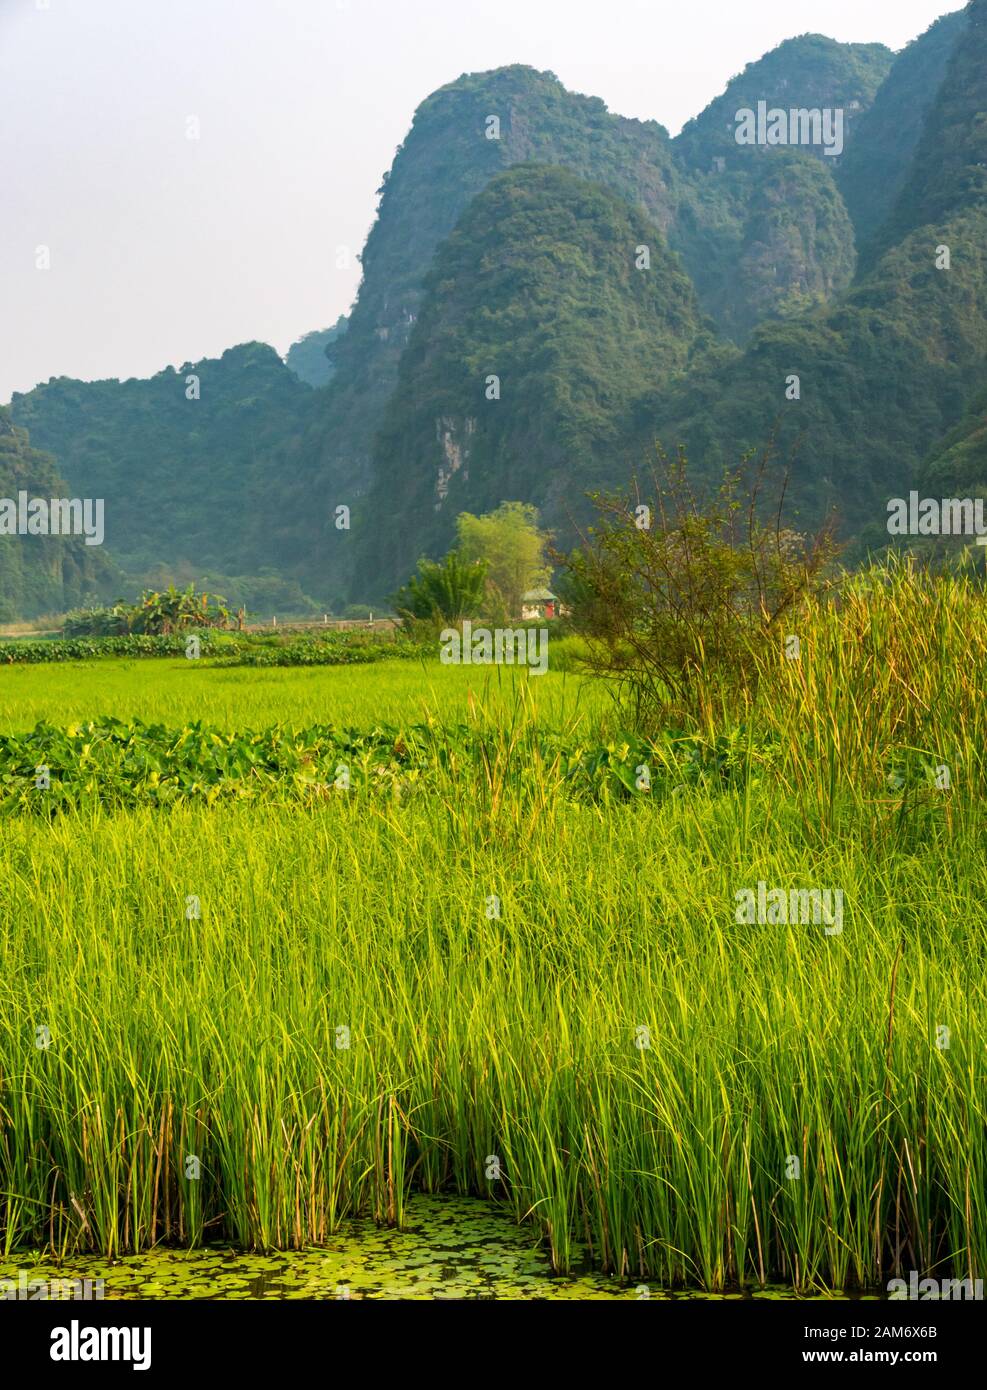 Rice paddy fields with view of limestone karst mountains, Tam Coc, Ninh Binh, Vietnam, Asia Stock Photo